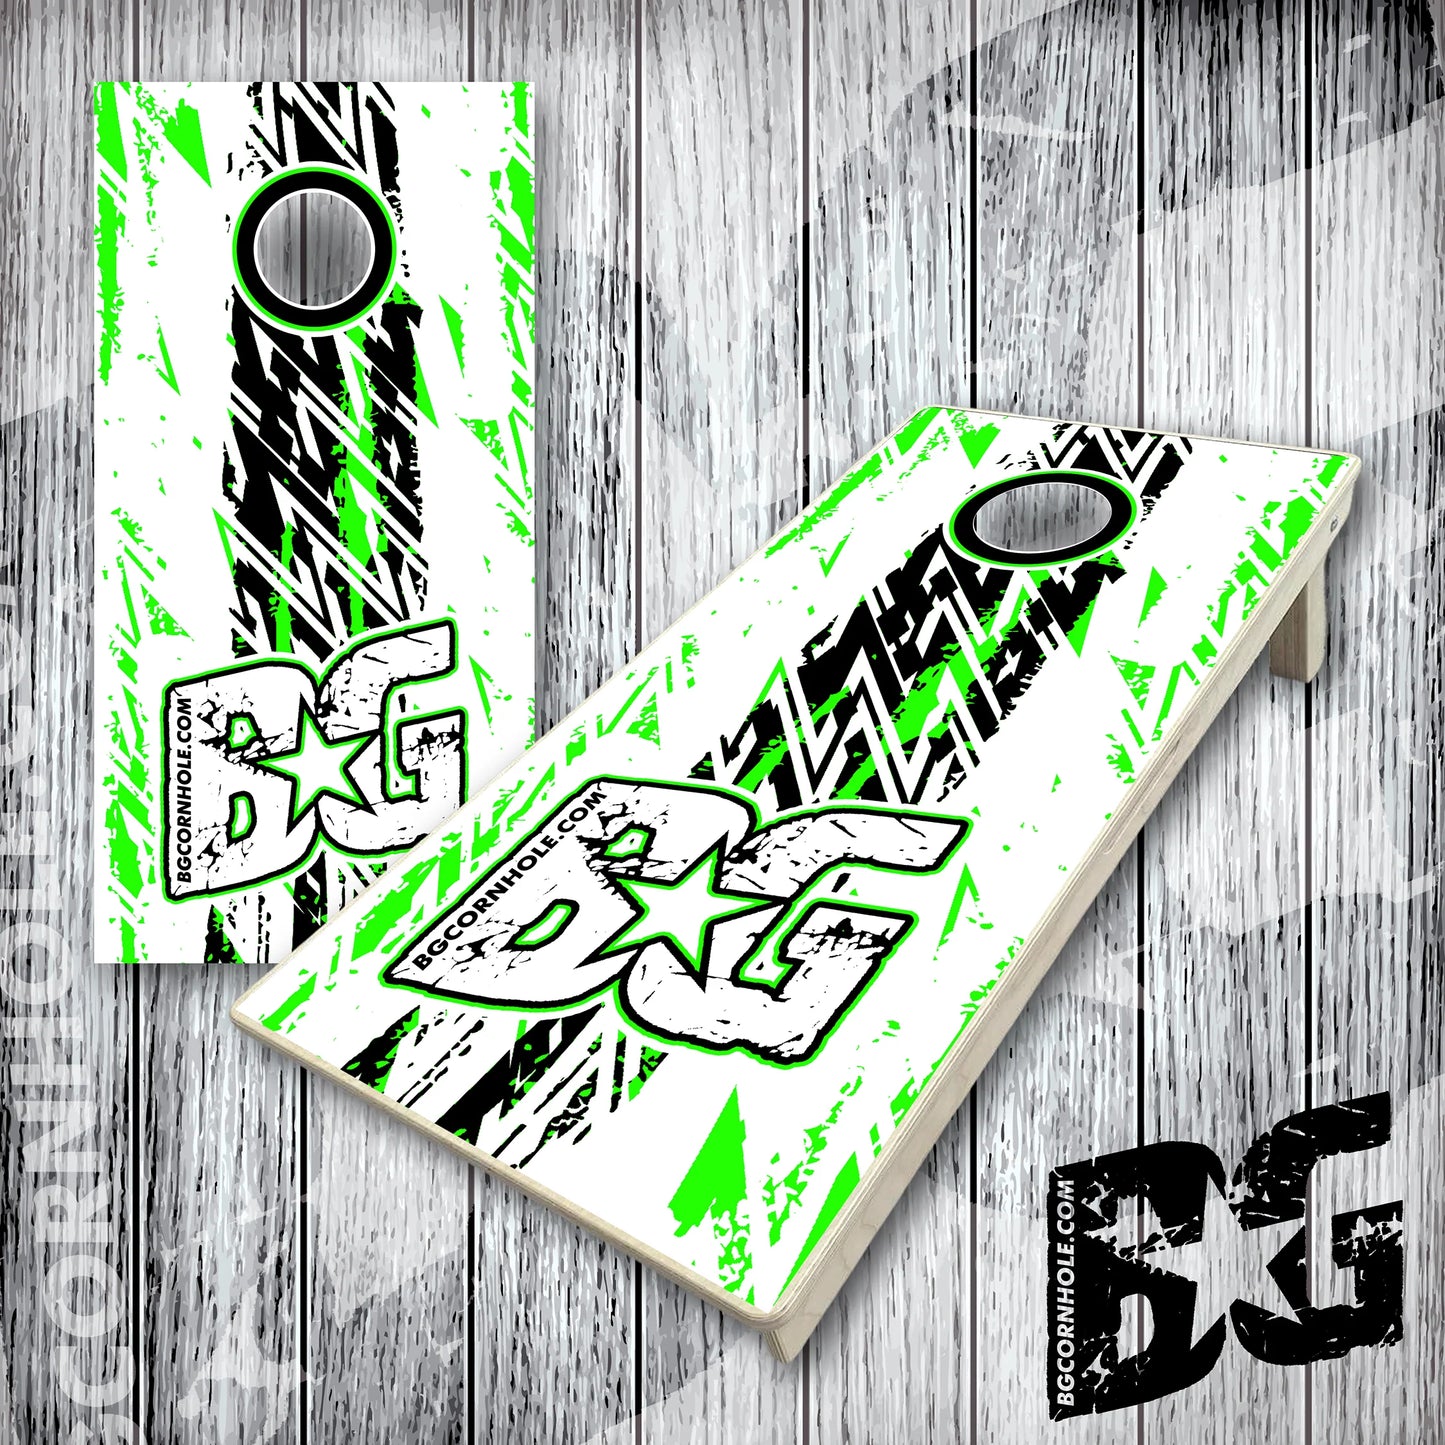 BG Cornhole Boards - Grunge - Green and Black